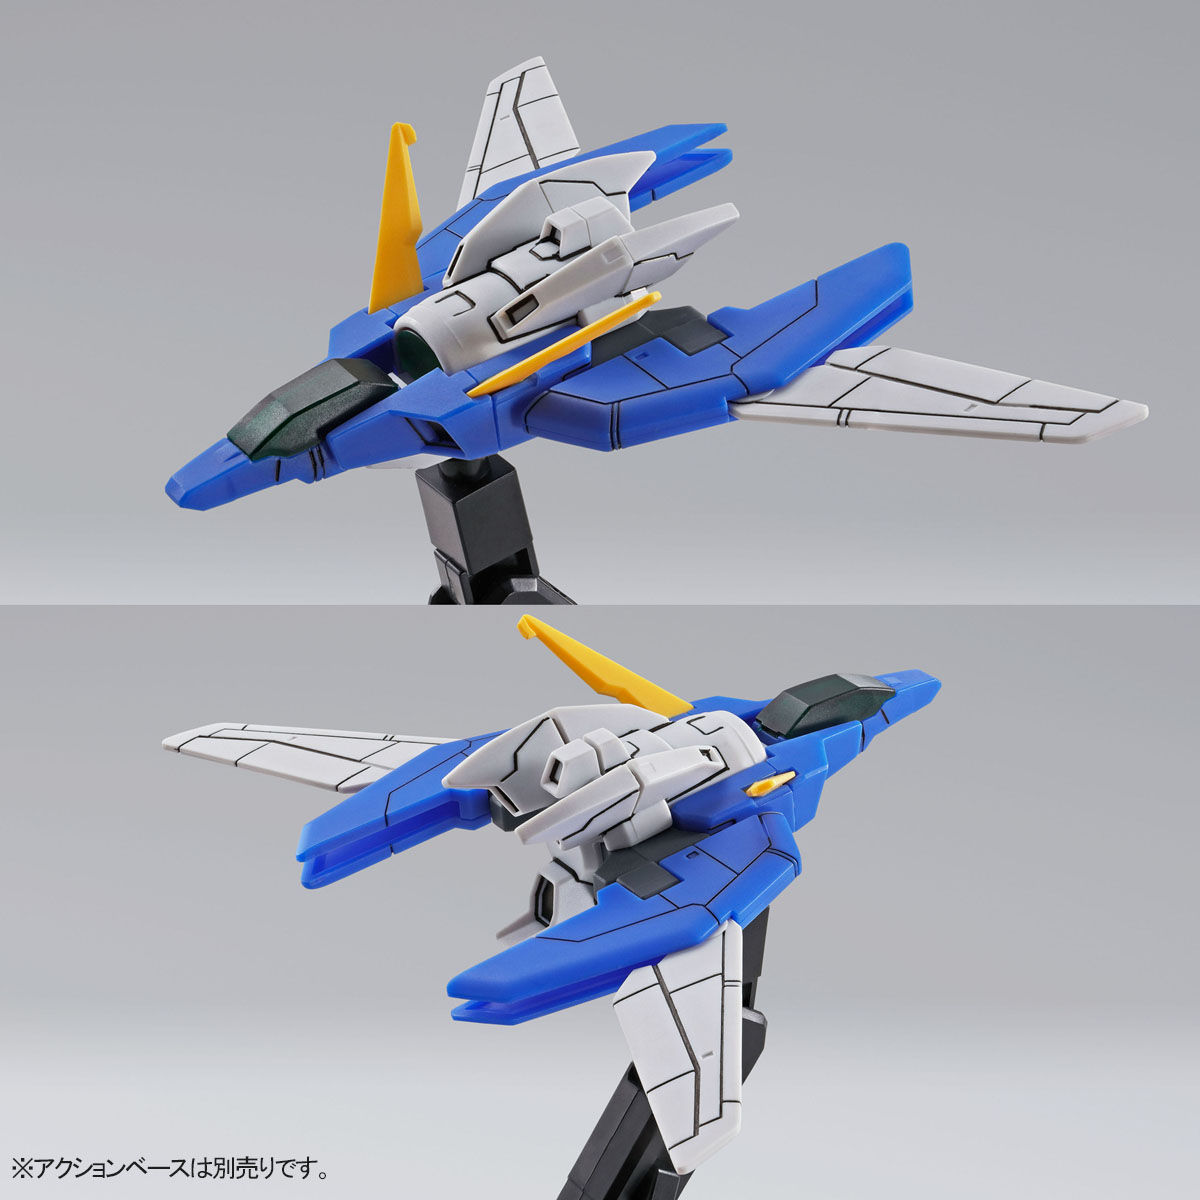 HG00 1/144 GNY-004 Gundam Plutone